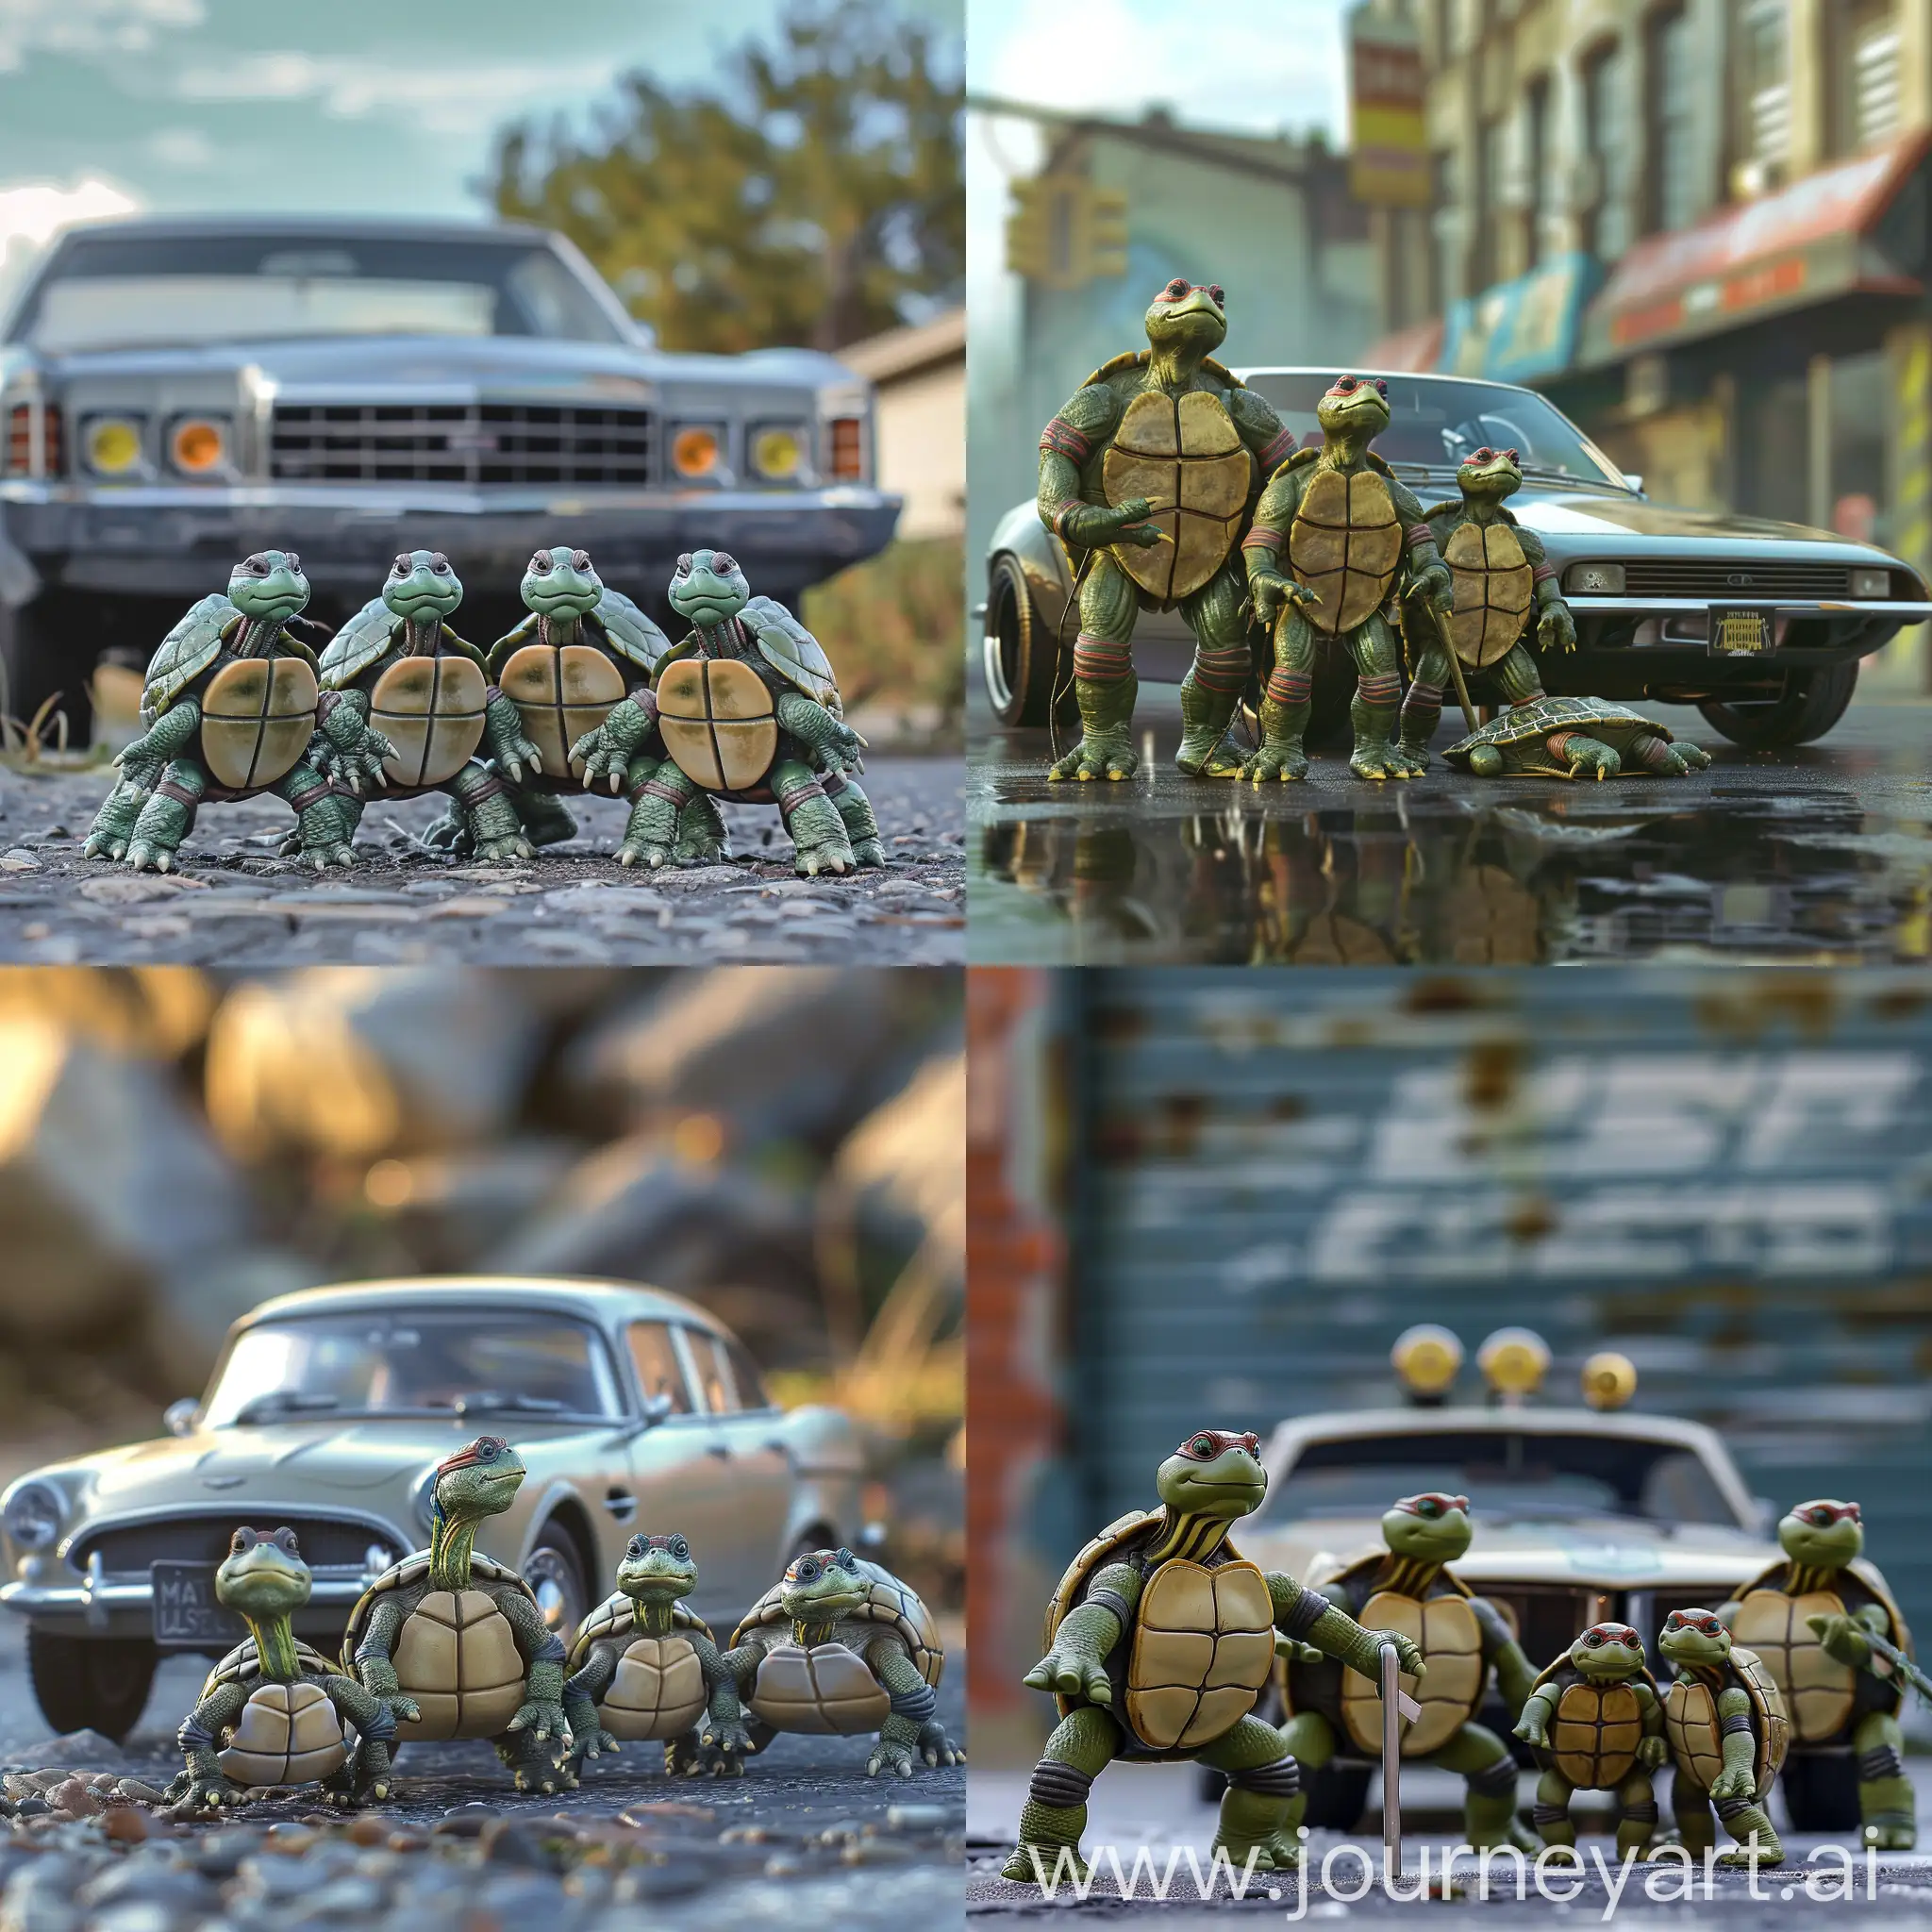 Five-Stylish-Turtles-Posing-with-a-Sleek-Car